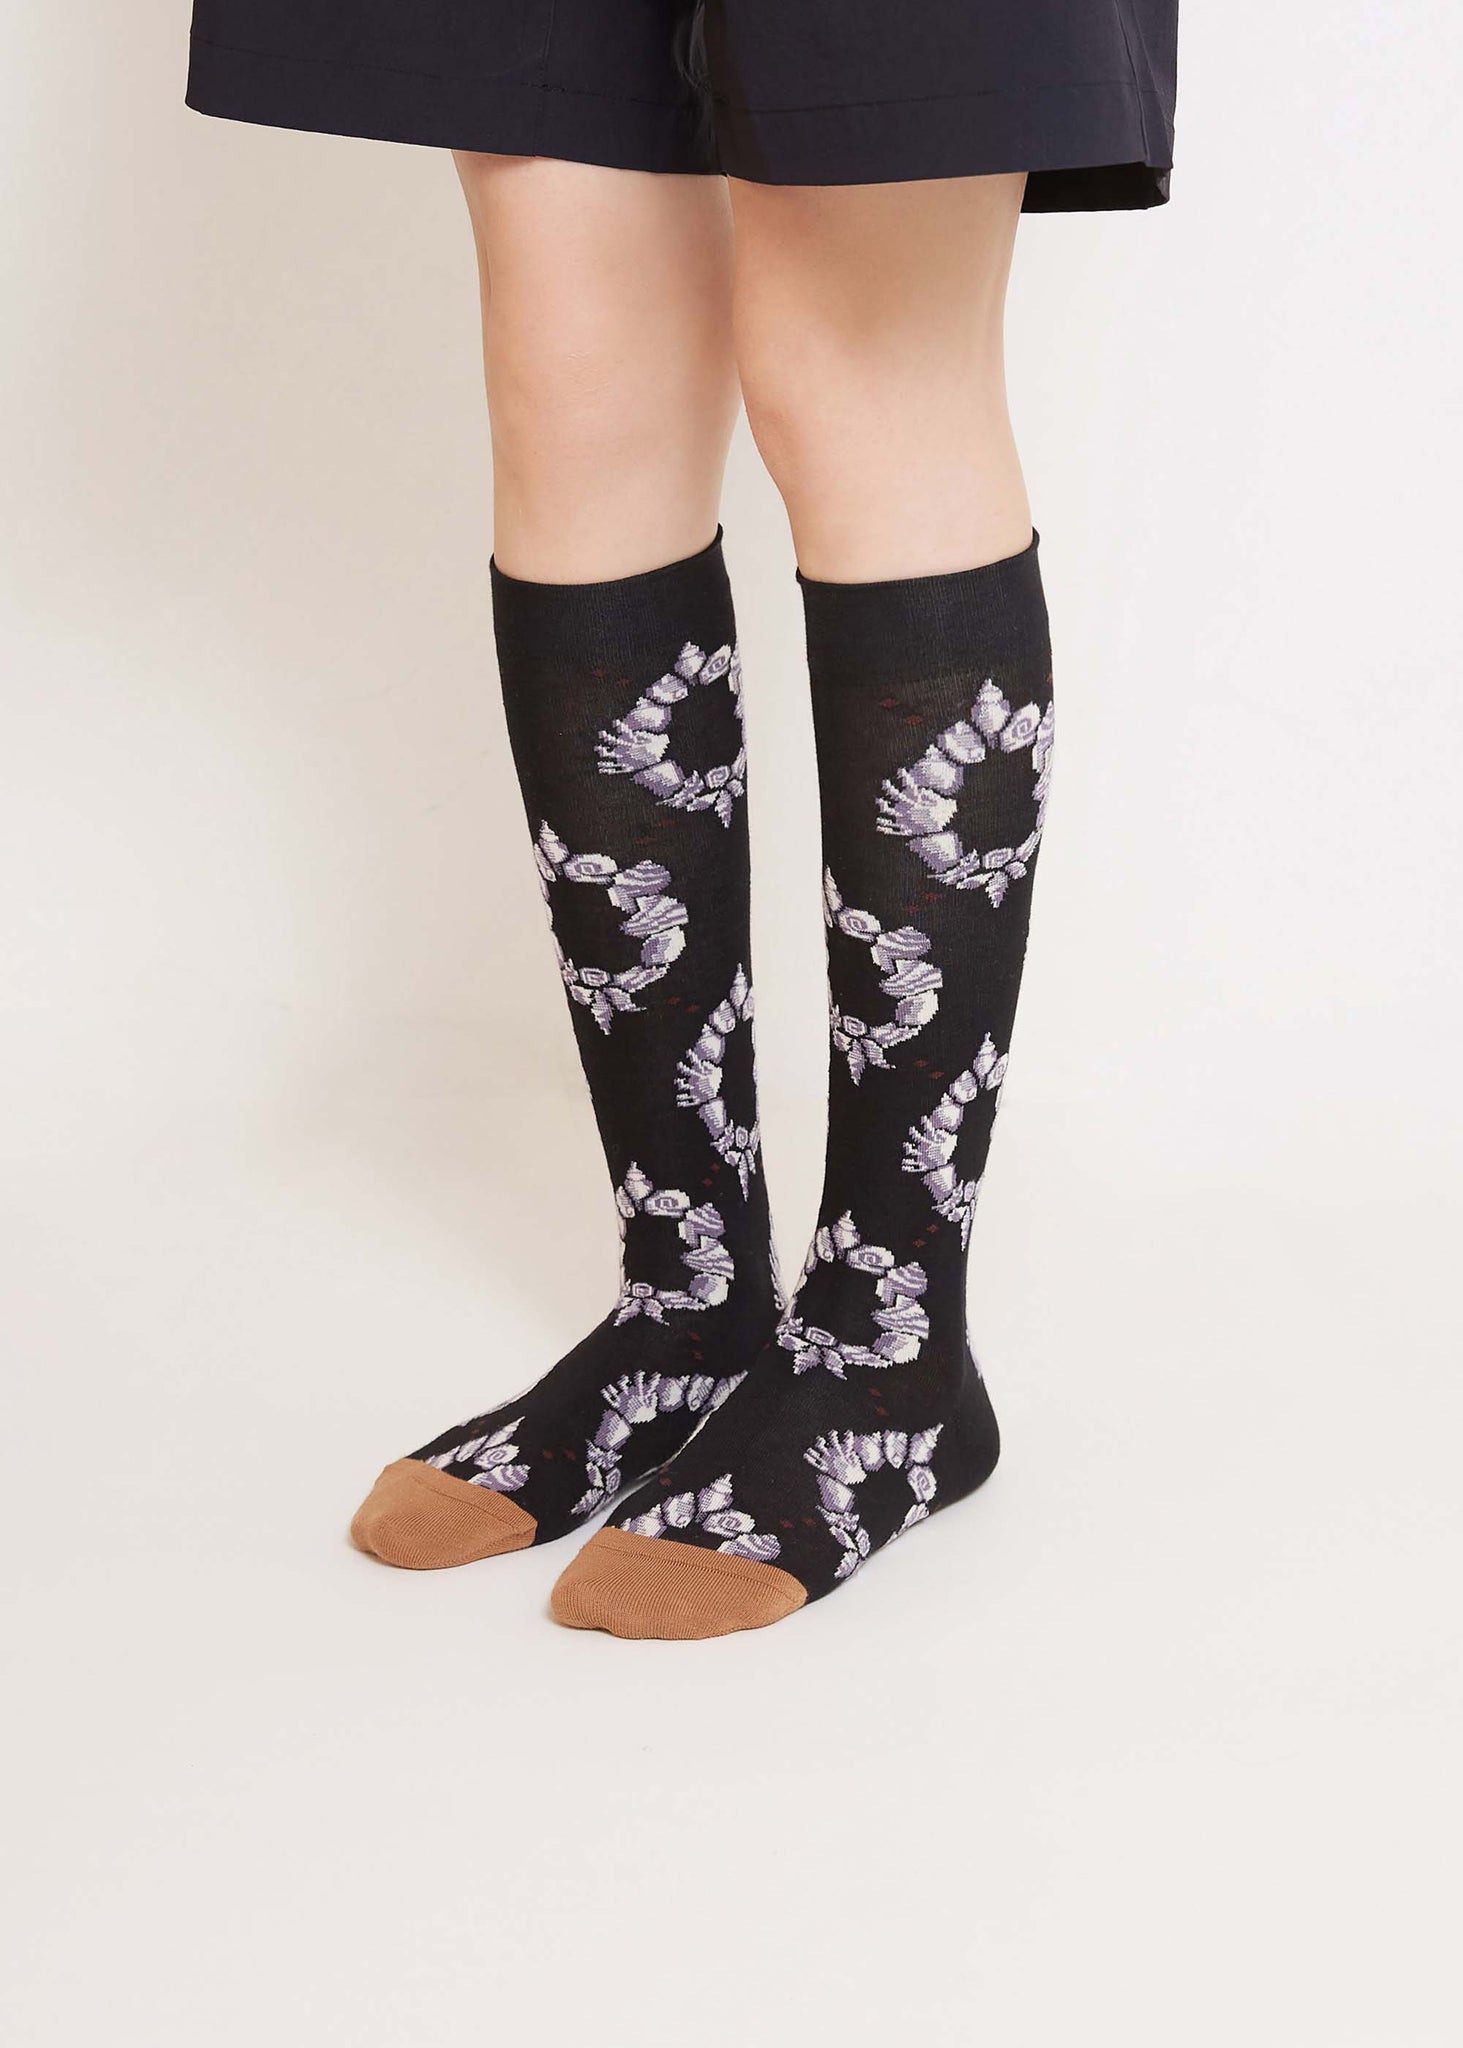 Brown Pattern Calf-High Socks - 157Moments